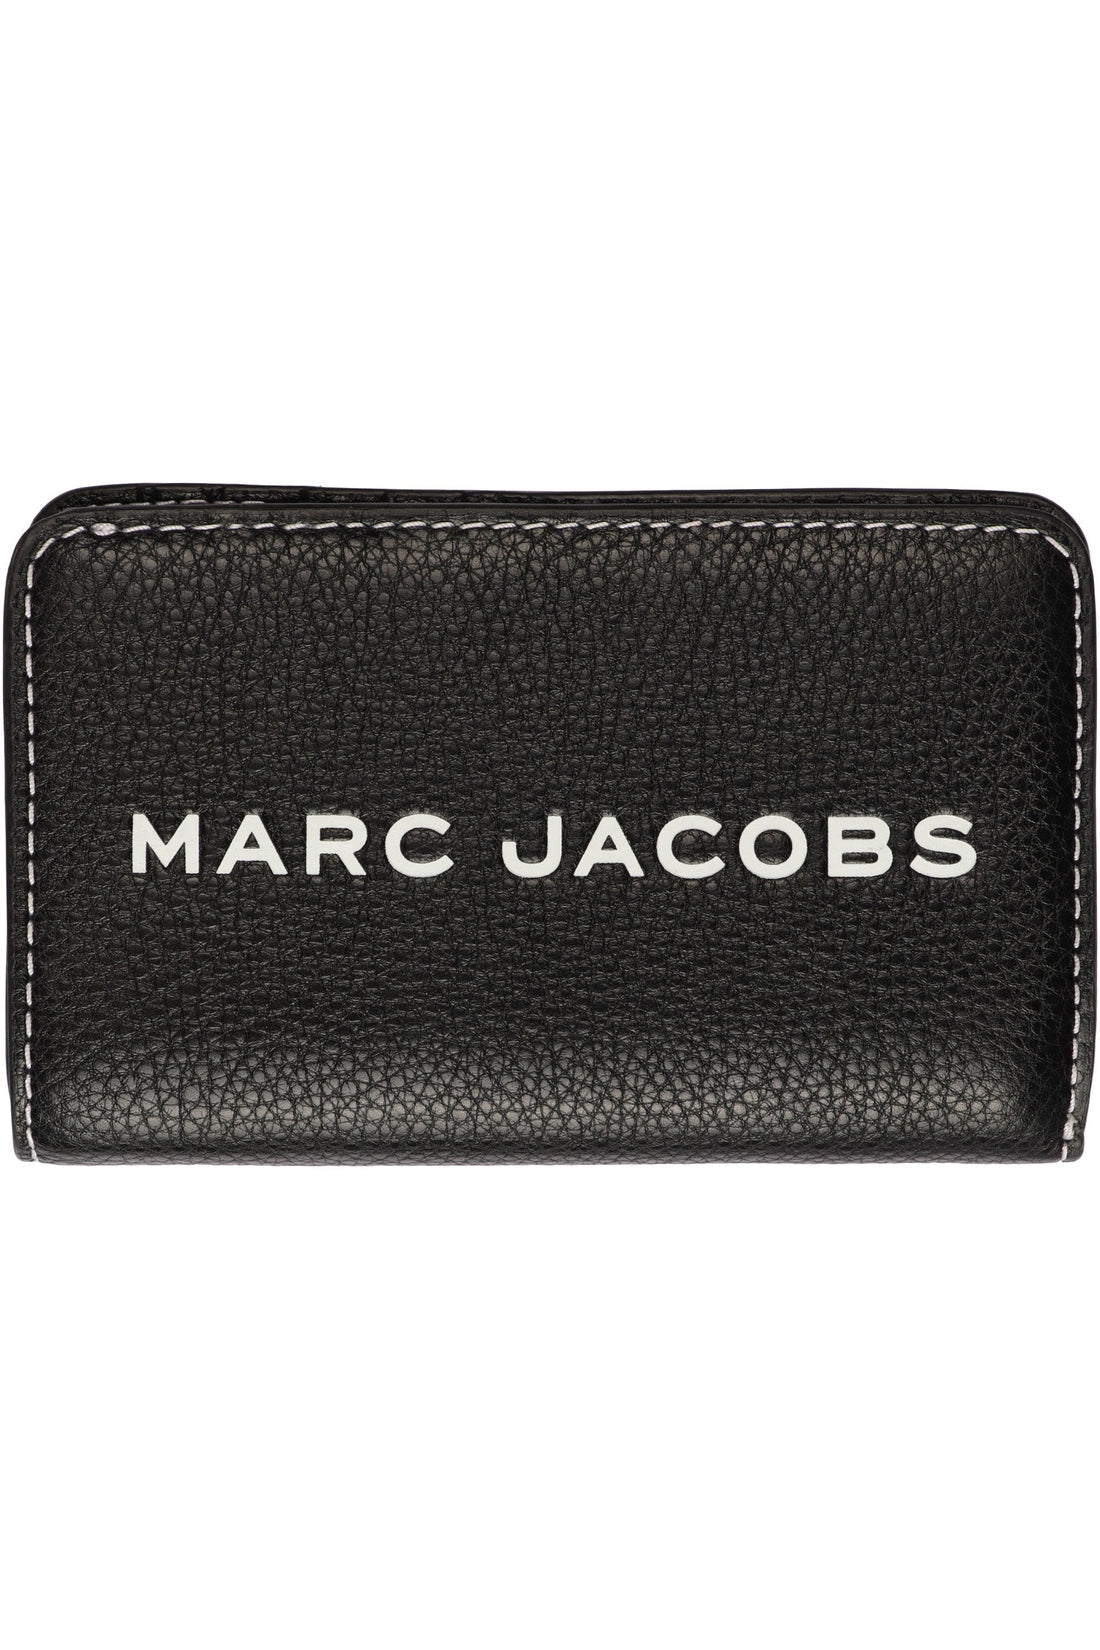 Marc Jacobs-OUTLET-SALE-Tag leather wallet-ARCHIVIST